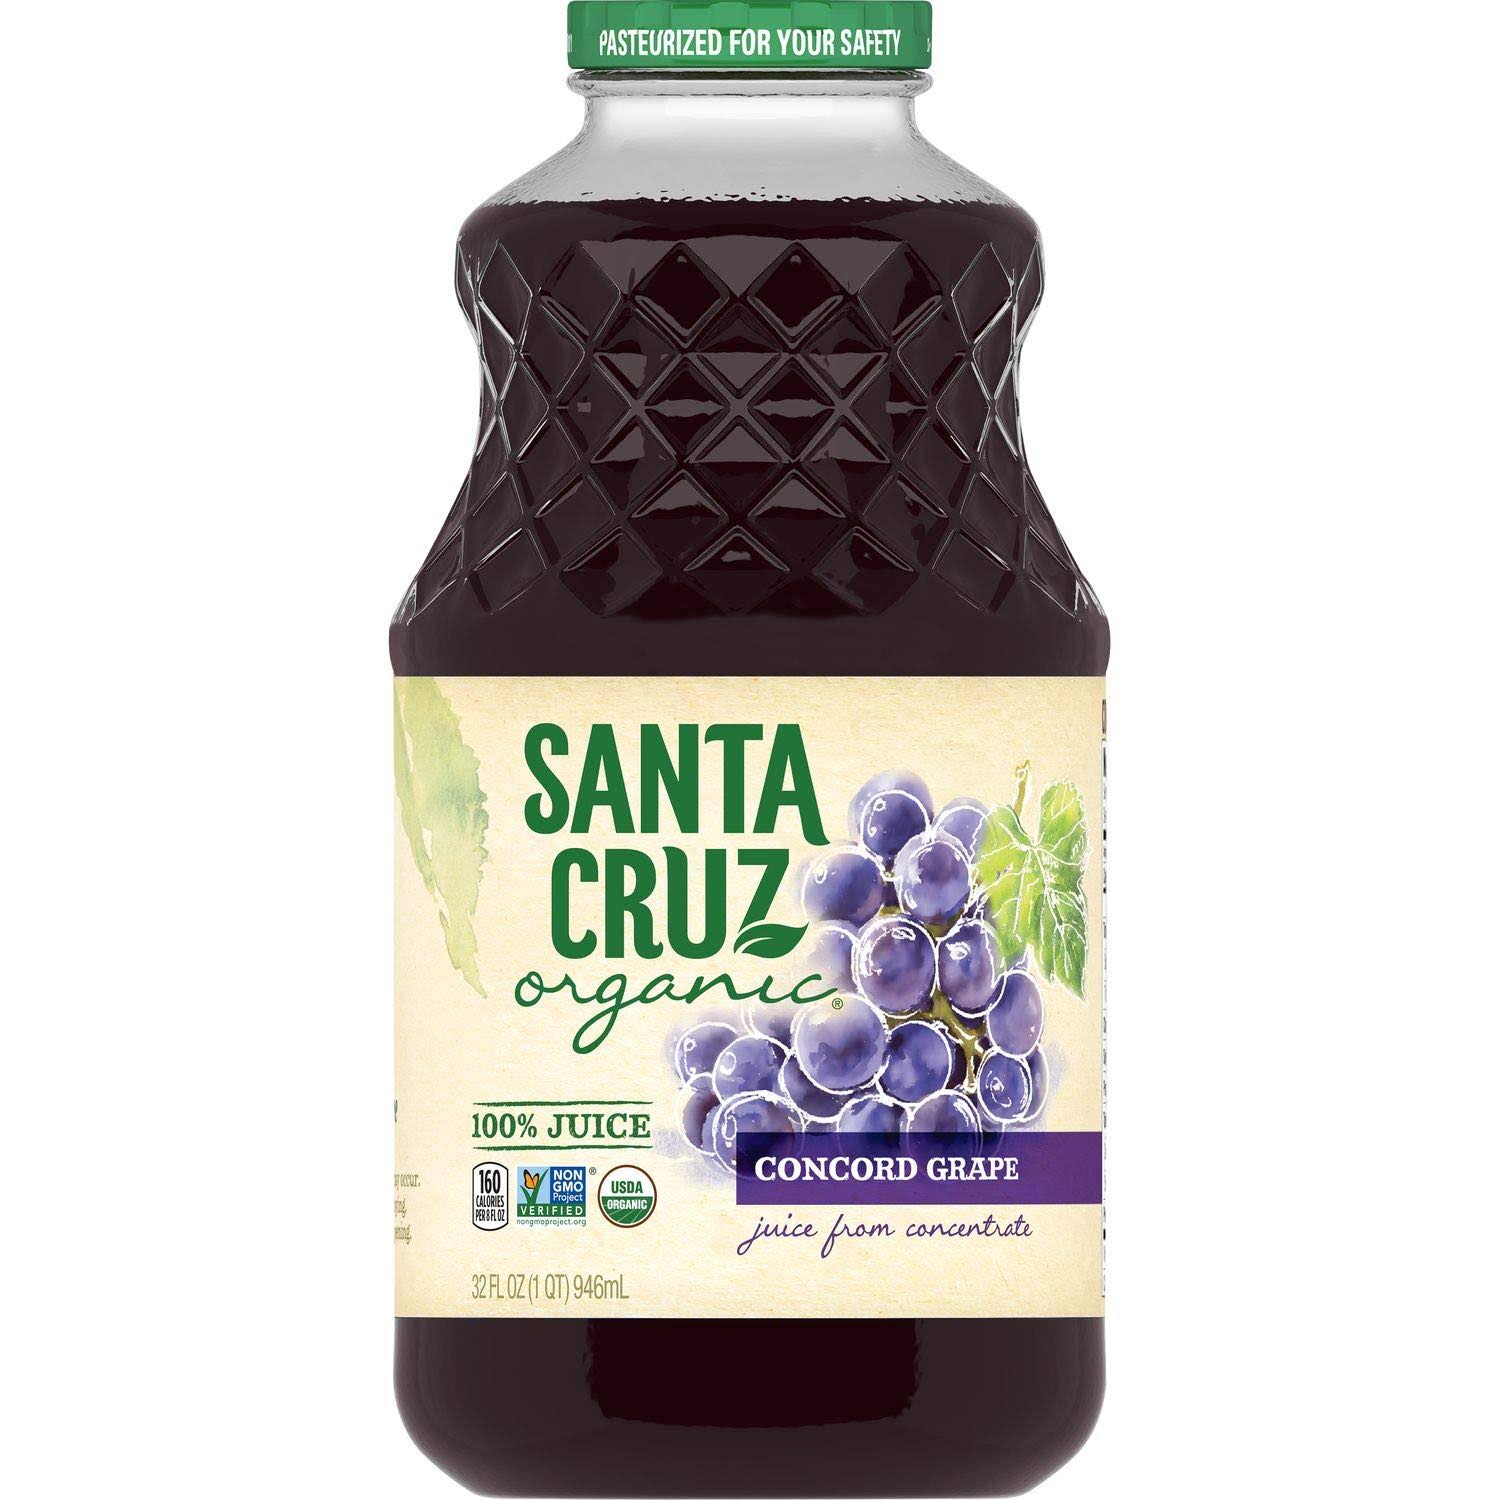 Santa Cruz Organic Juice Concord Grape Juice